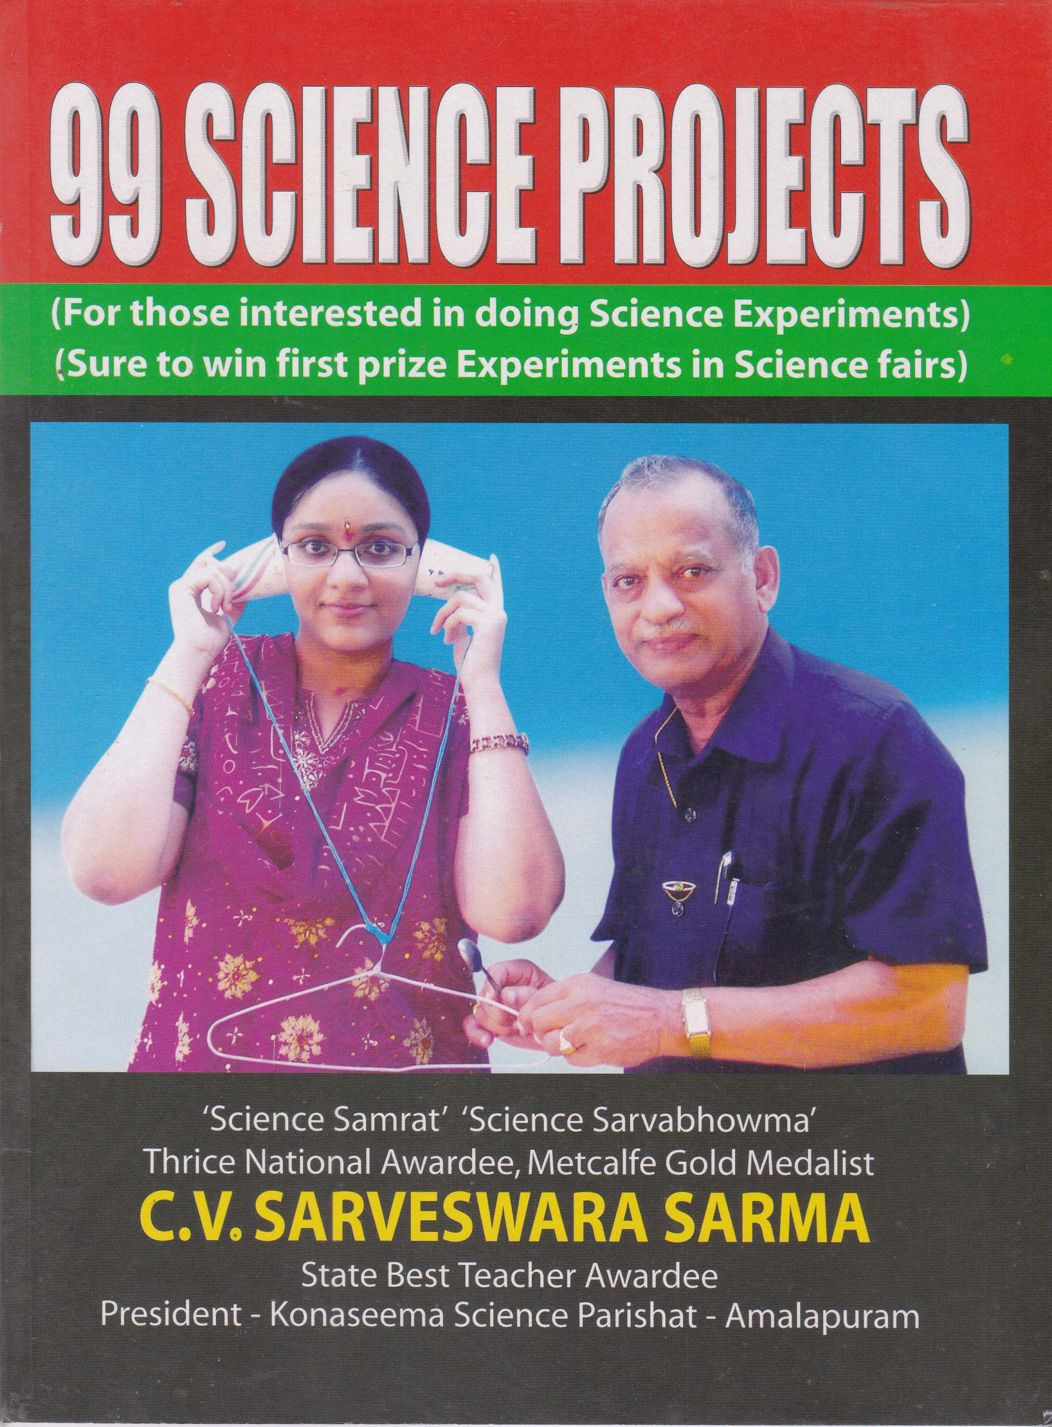 99-science-projects-telugu-c-v-sarveswara-sarma-1